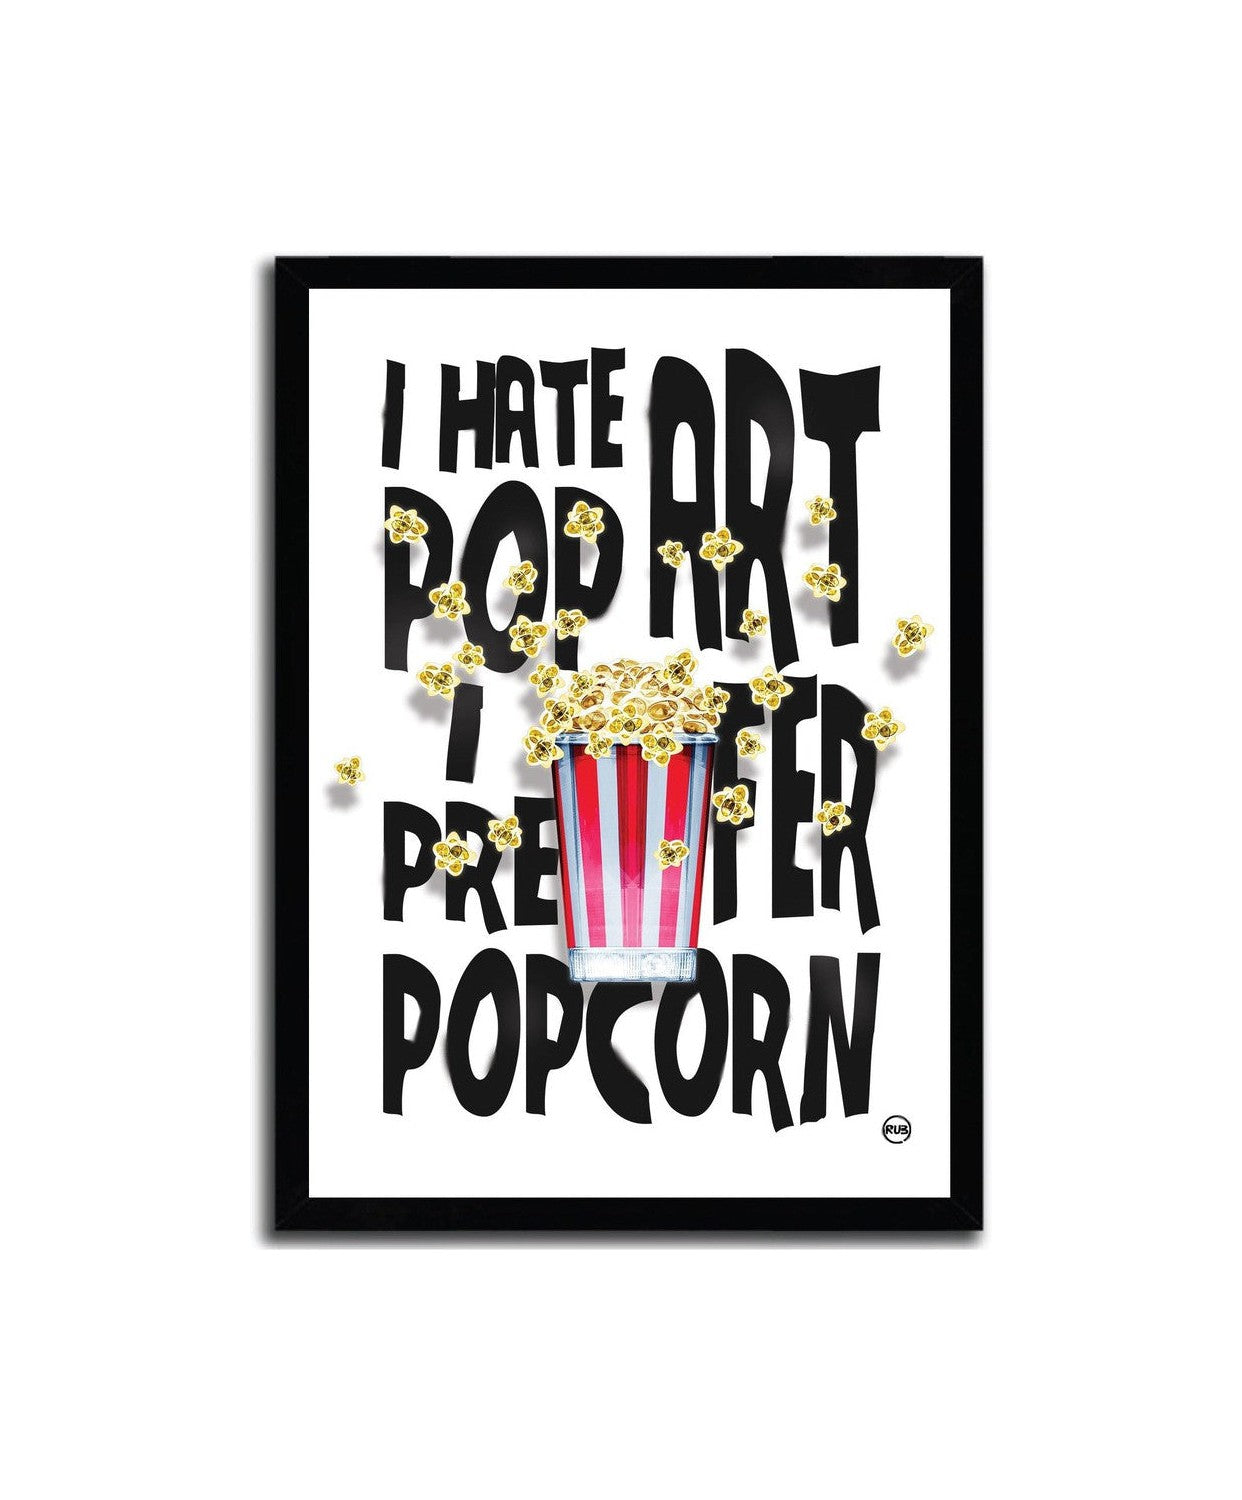 Affiche artprint pop-corn par Rubiant